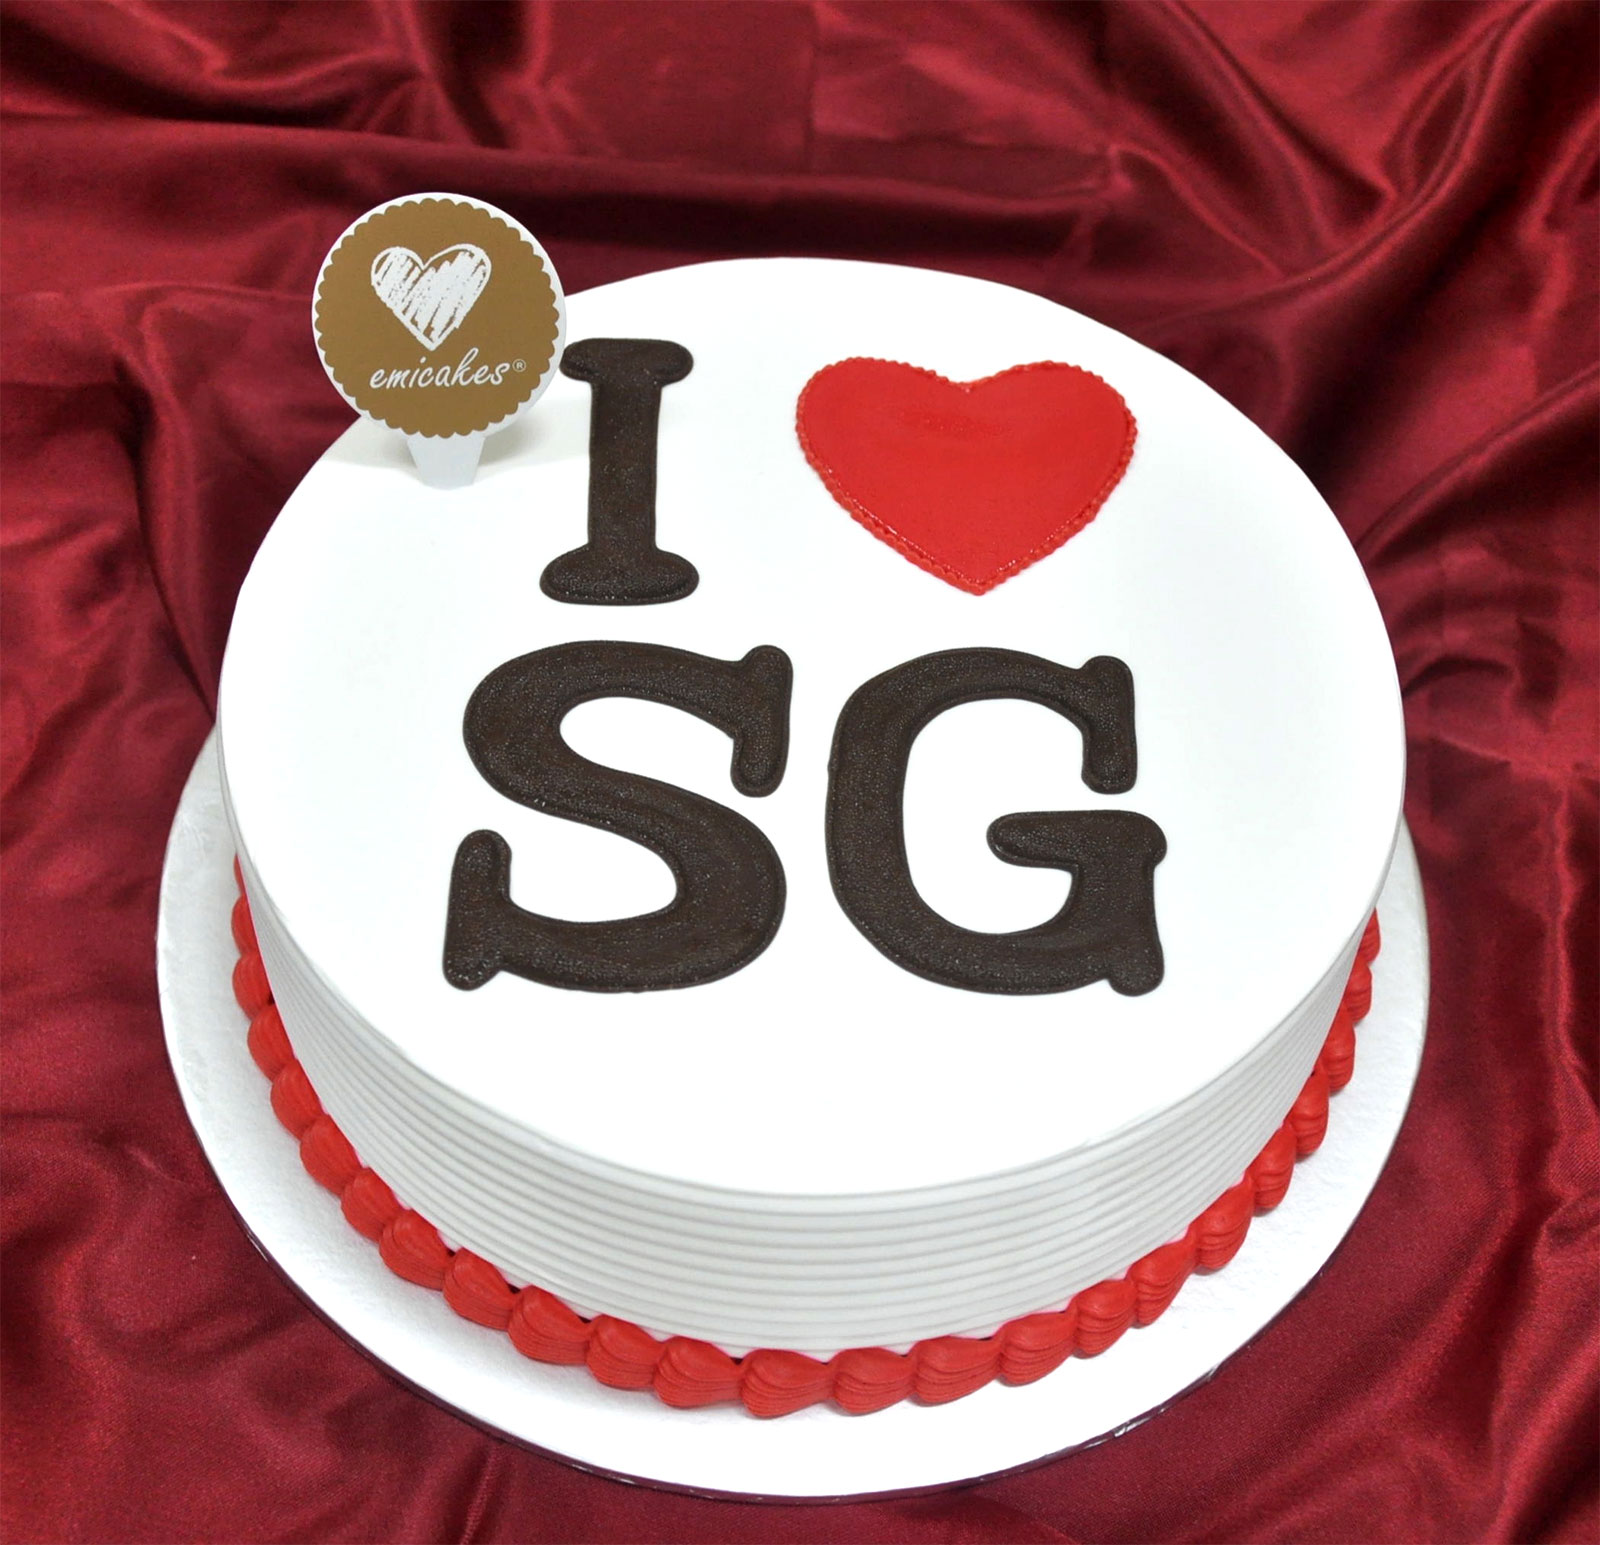 I Love SG cake from Emicakes